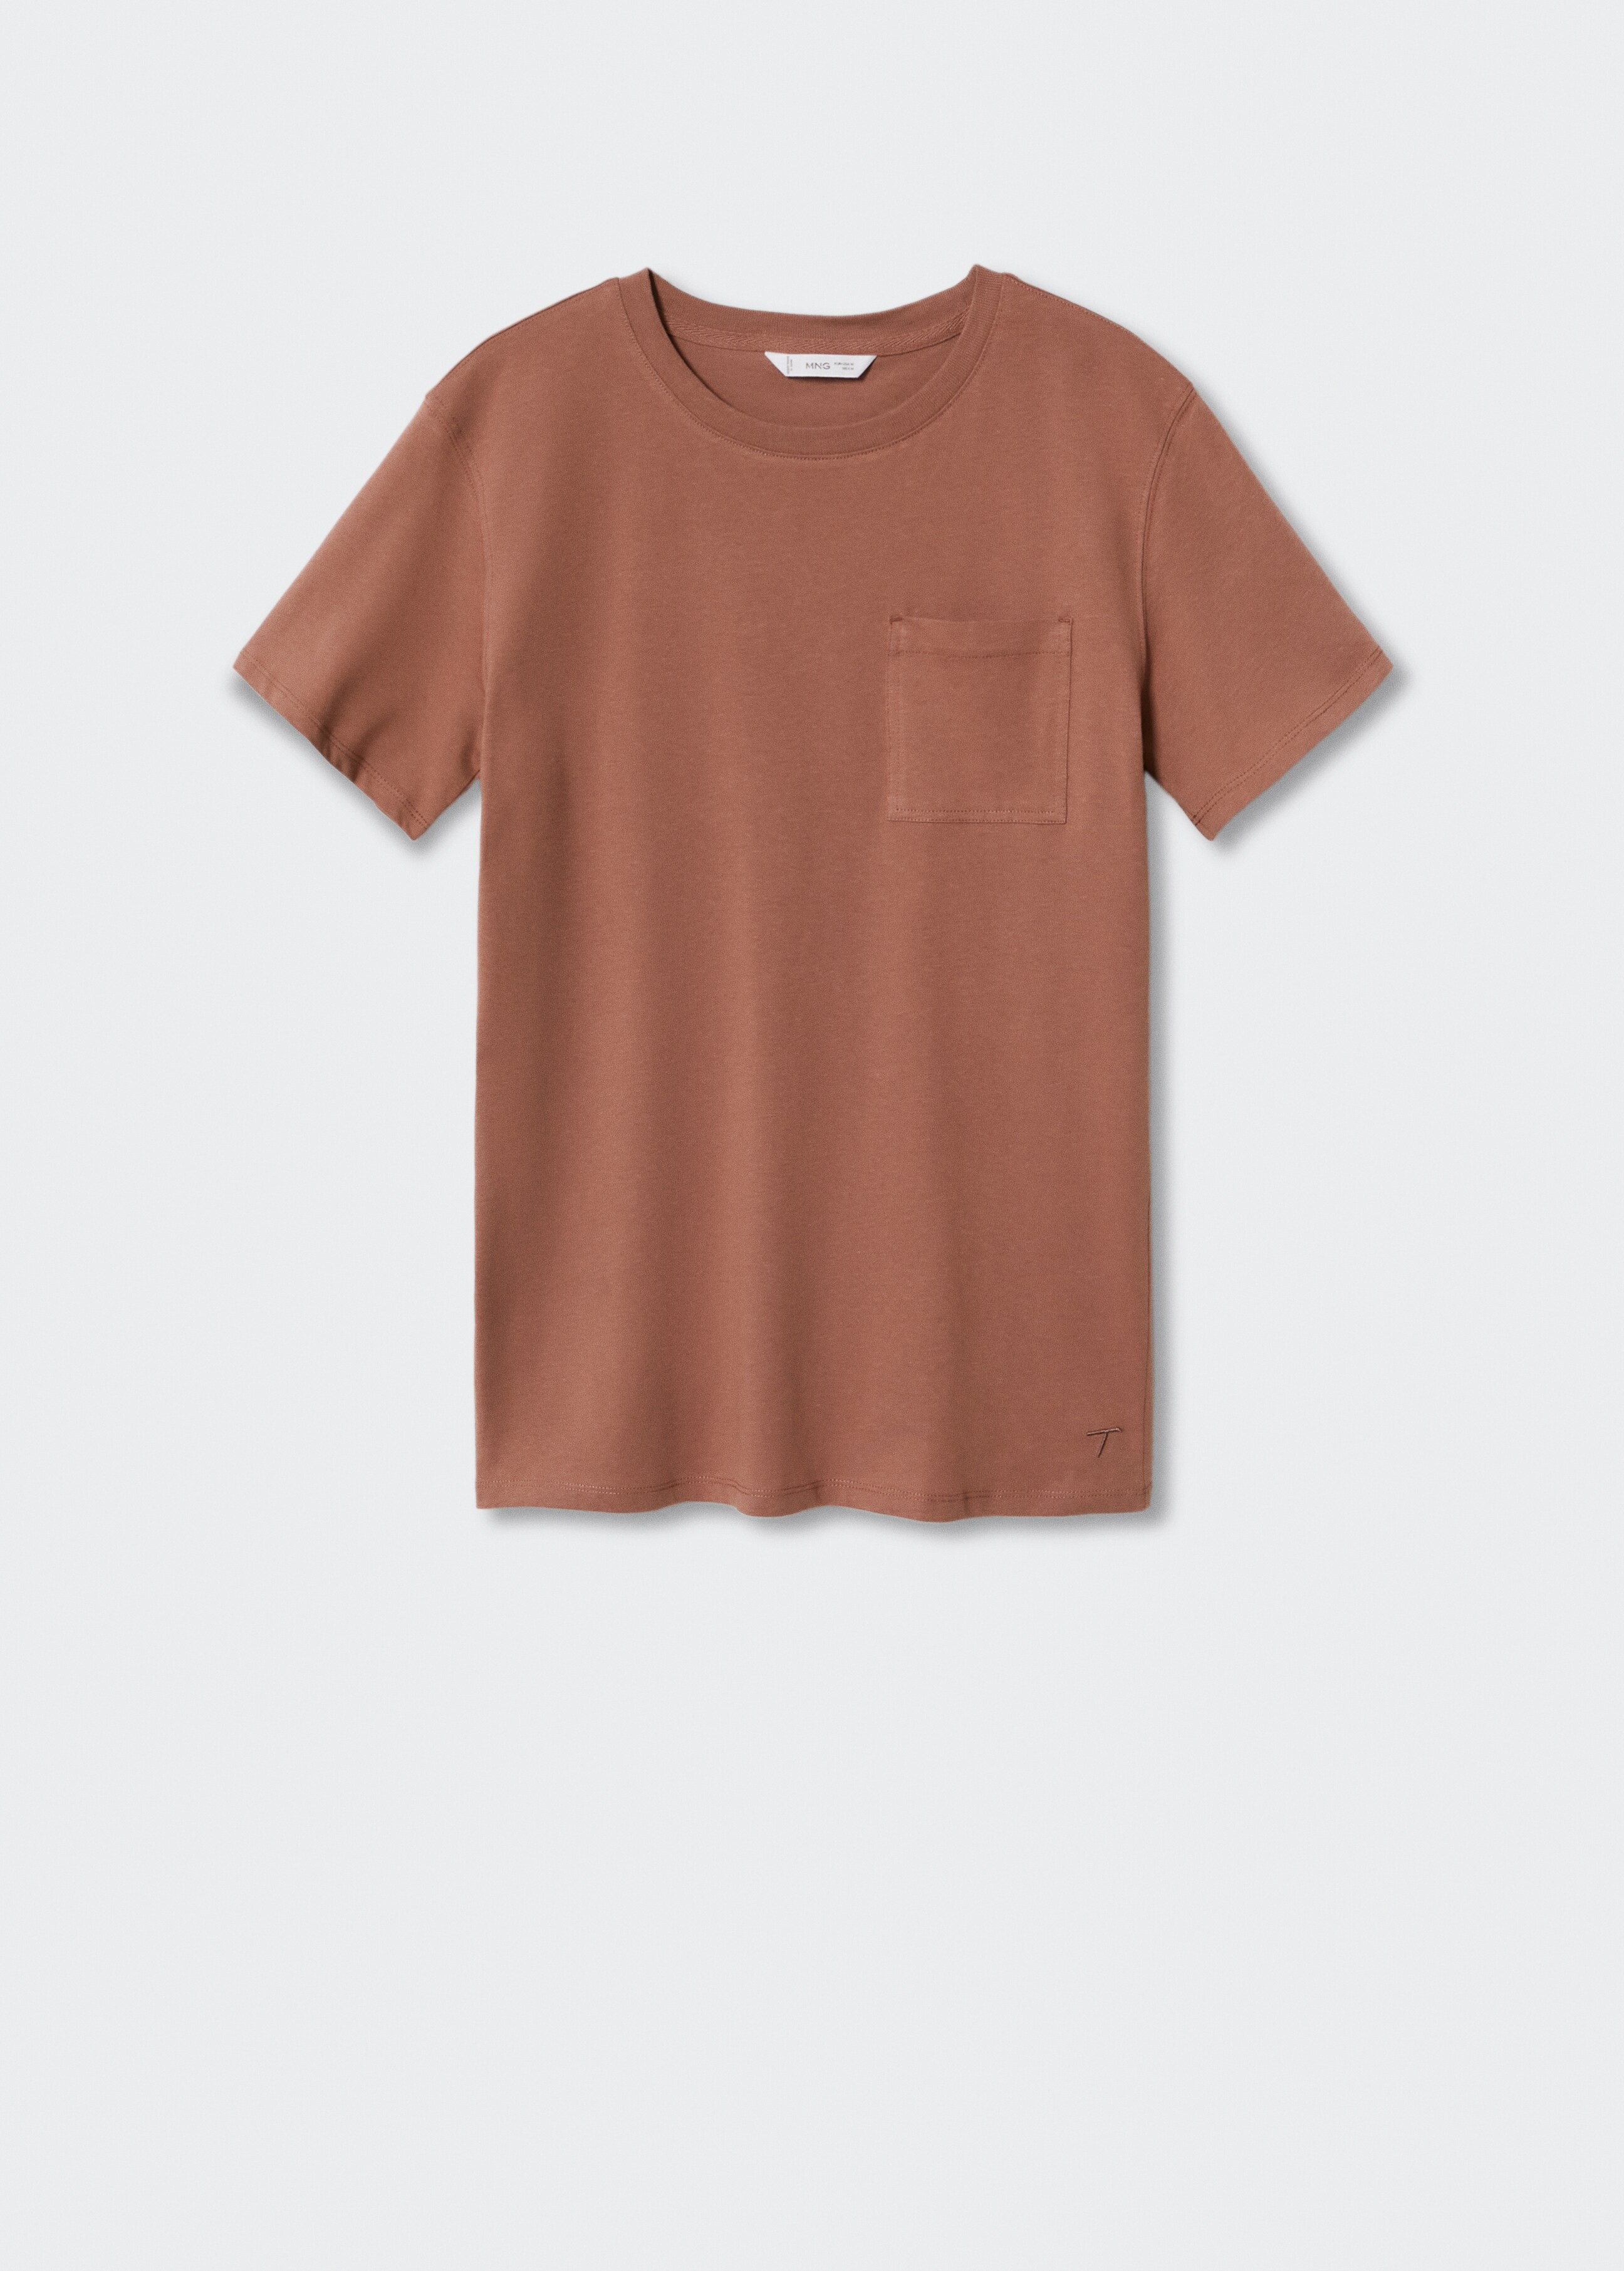 Camiseta algodón bolsillo - Artículo sin modelo